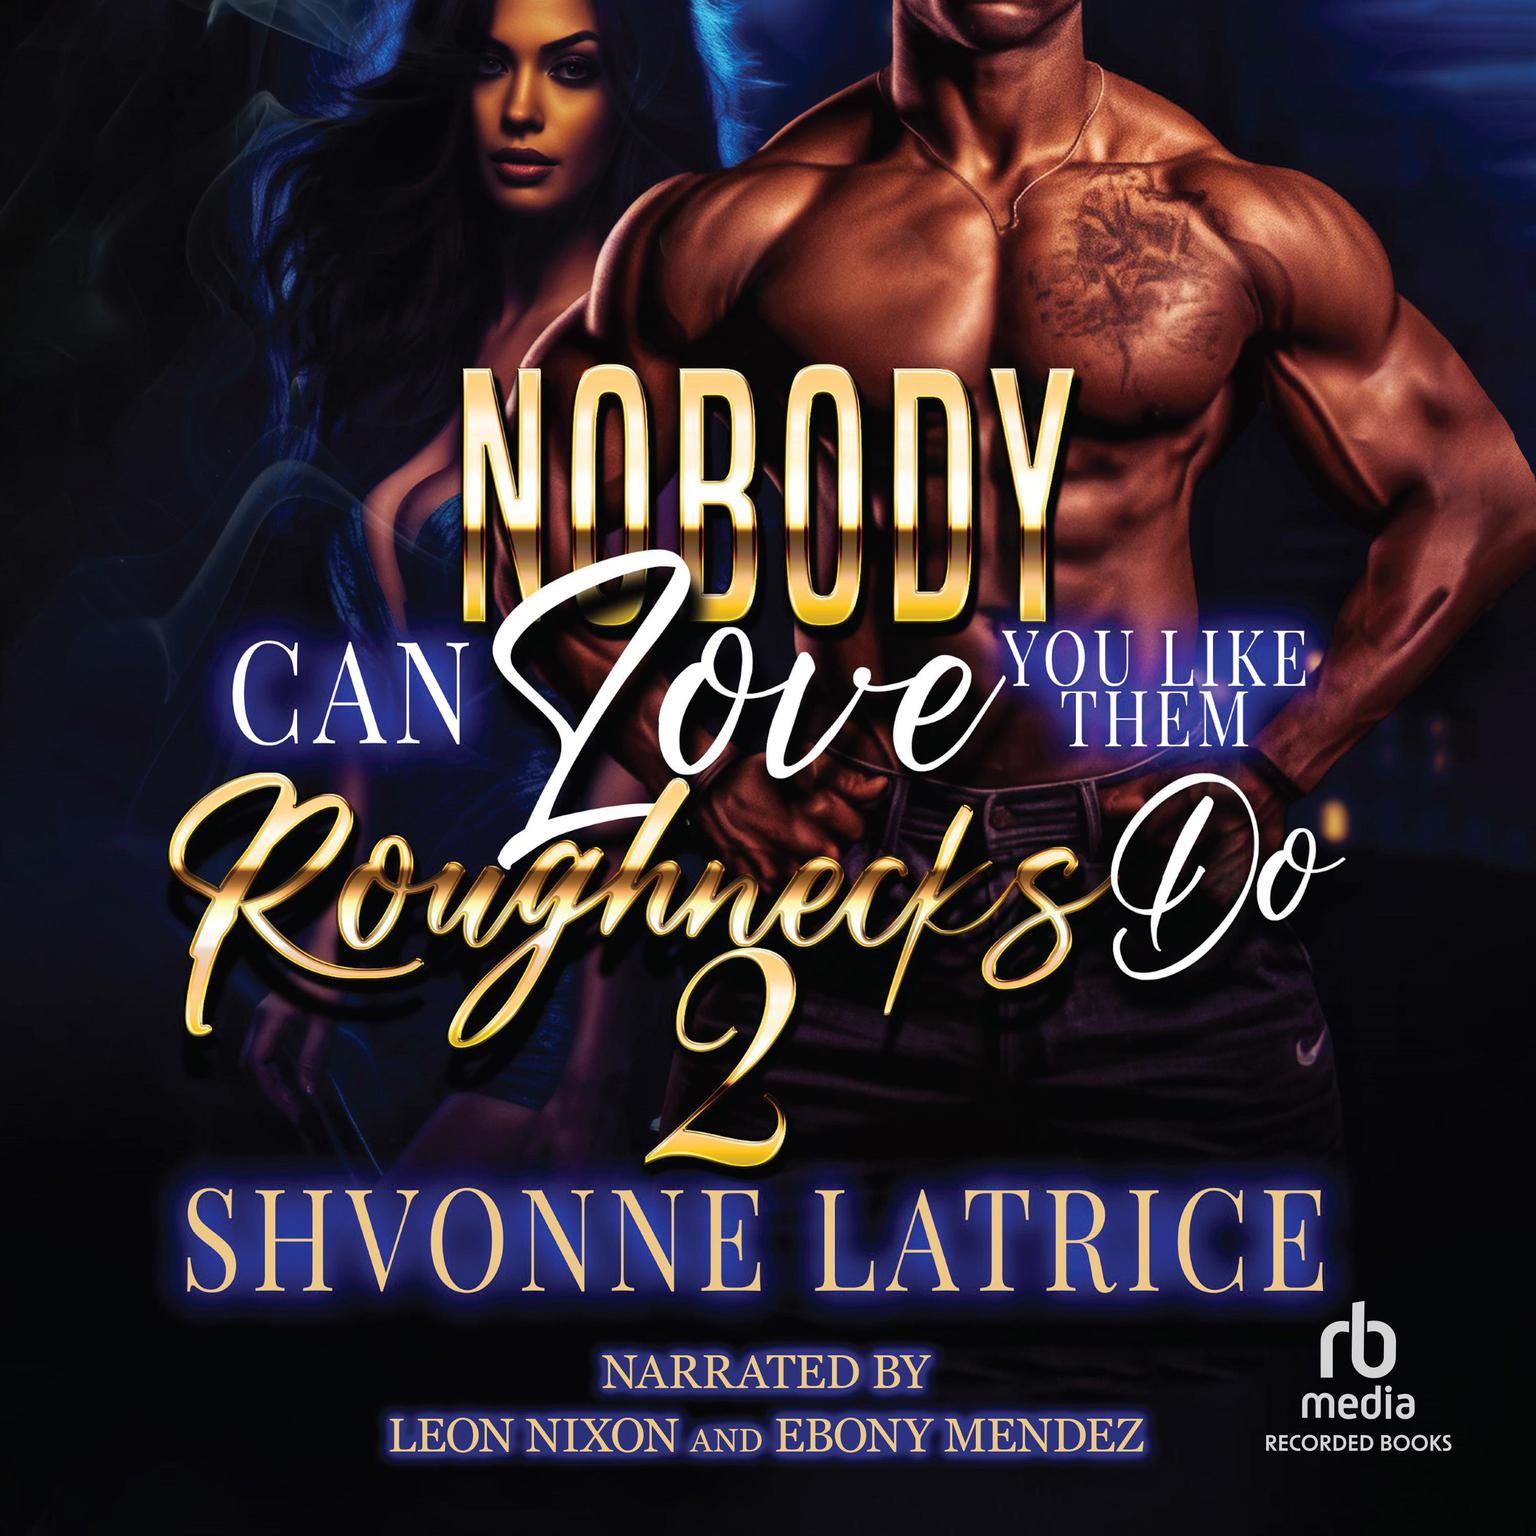 Nobody Can Love You Like Them Roughnecks Do #2 Audiobook, by Shvonne Latrice